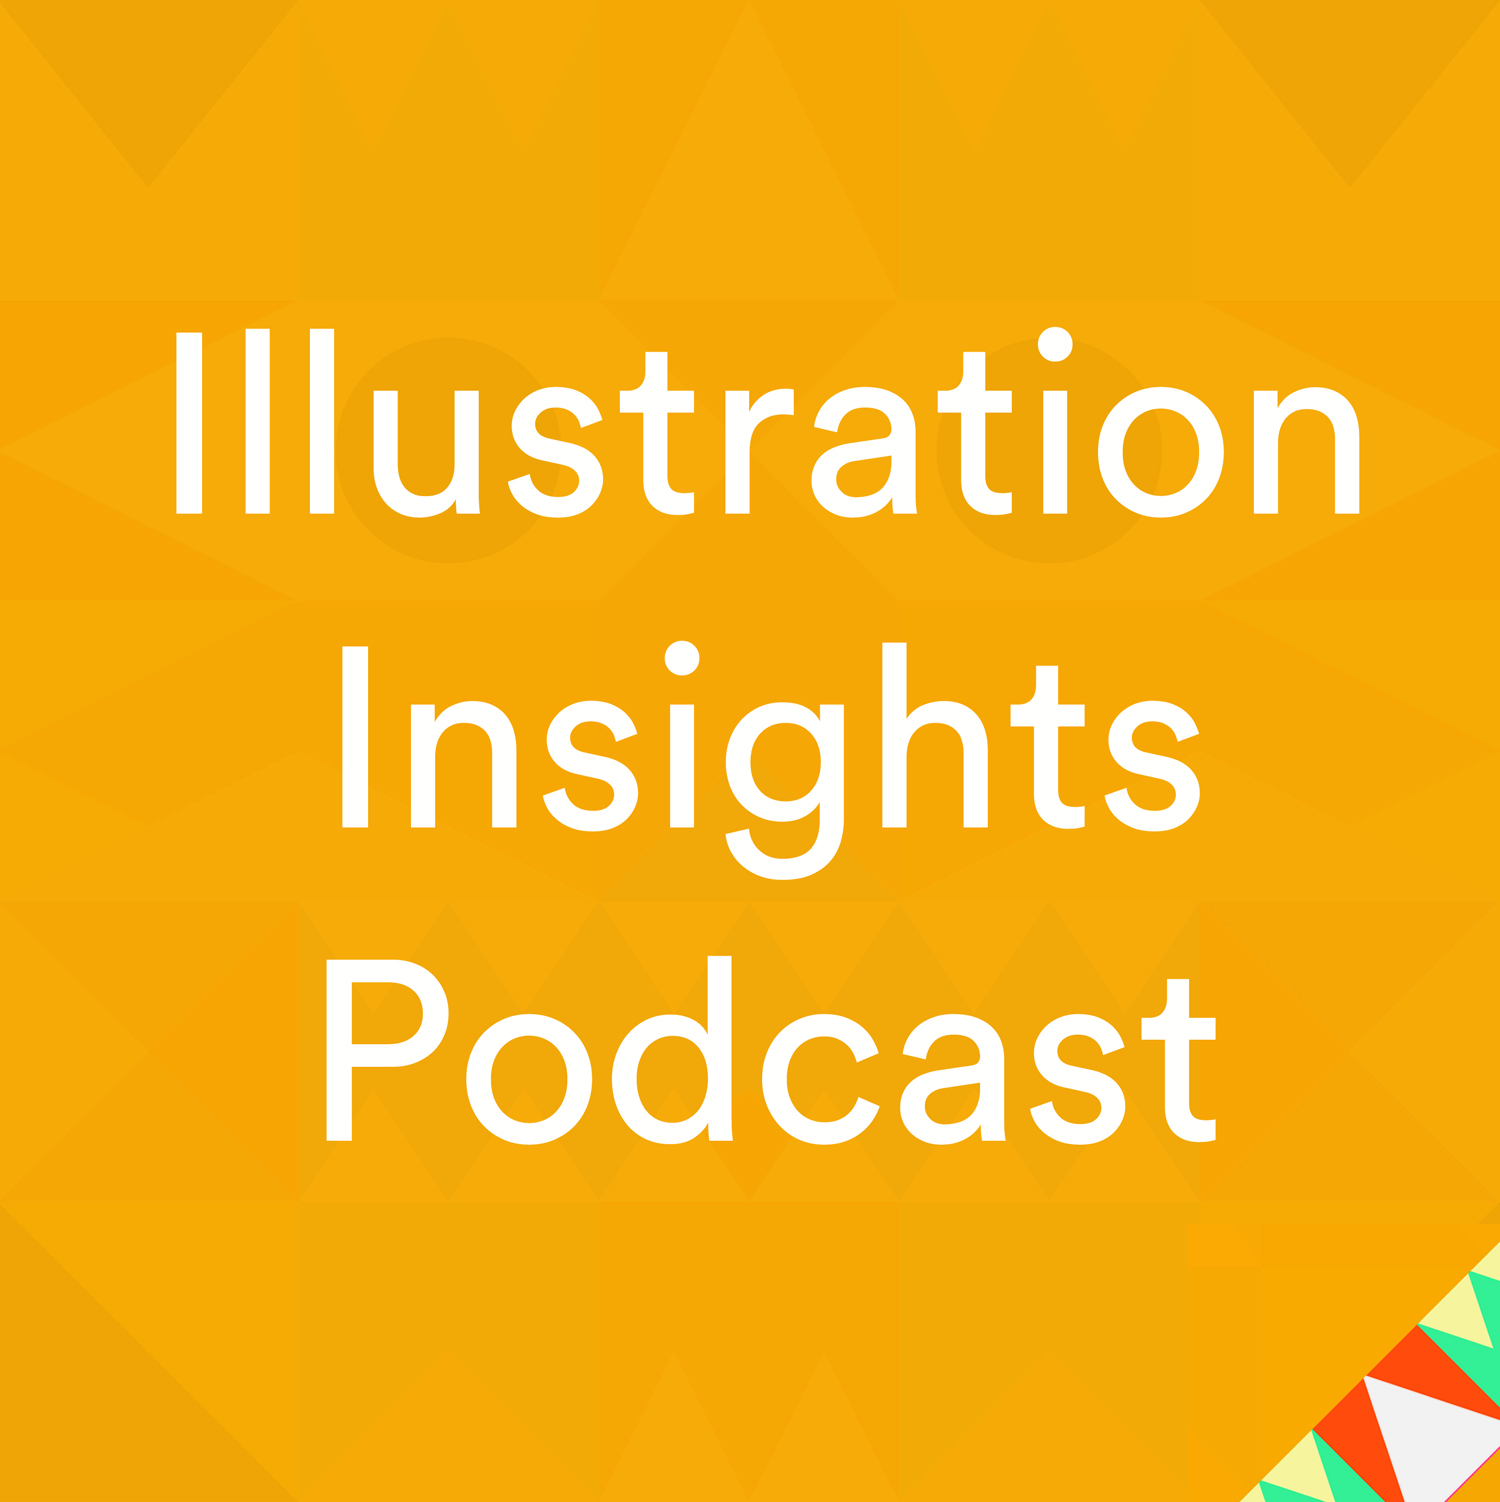 Illustration Insights Podcast (James Gilleard)